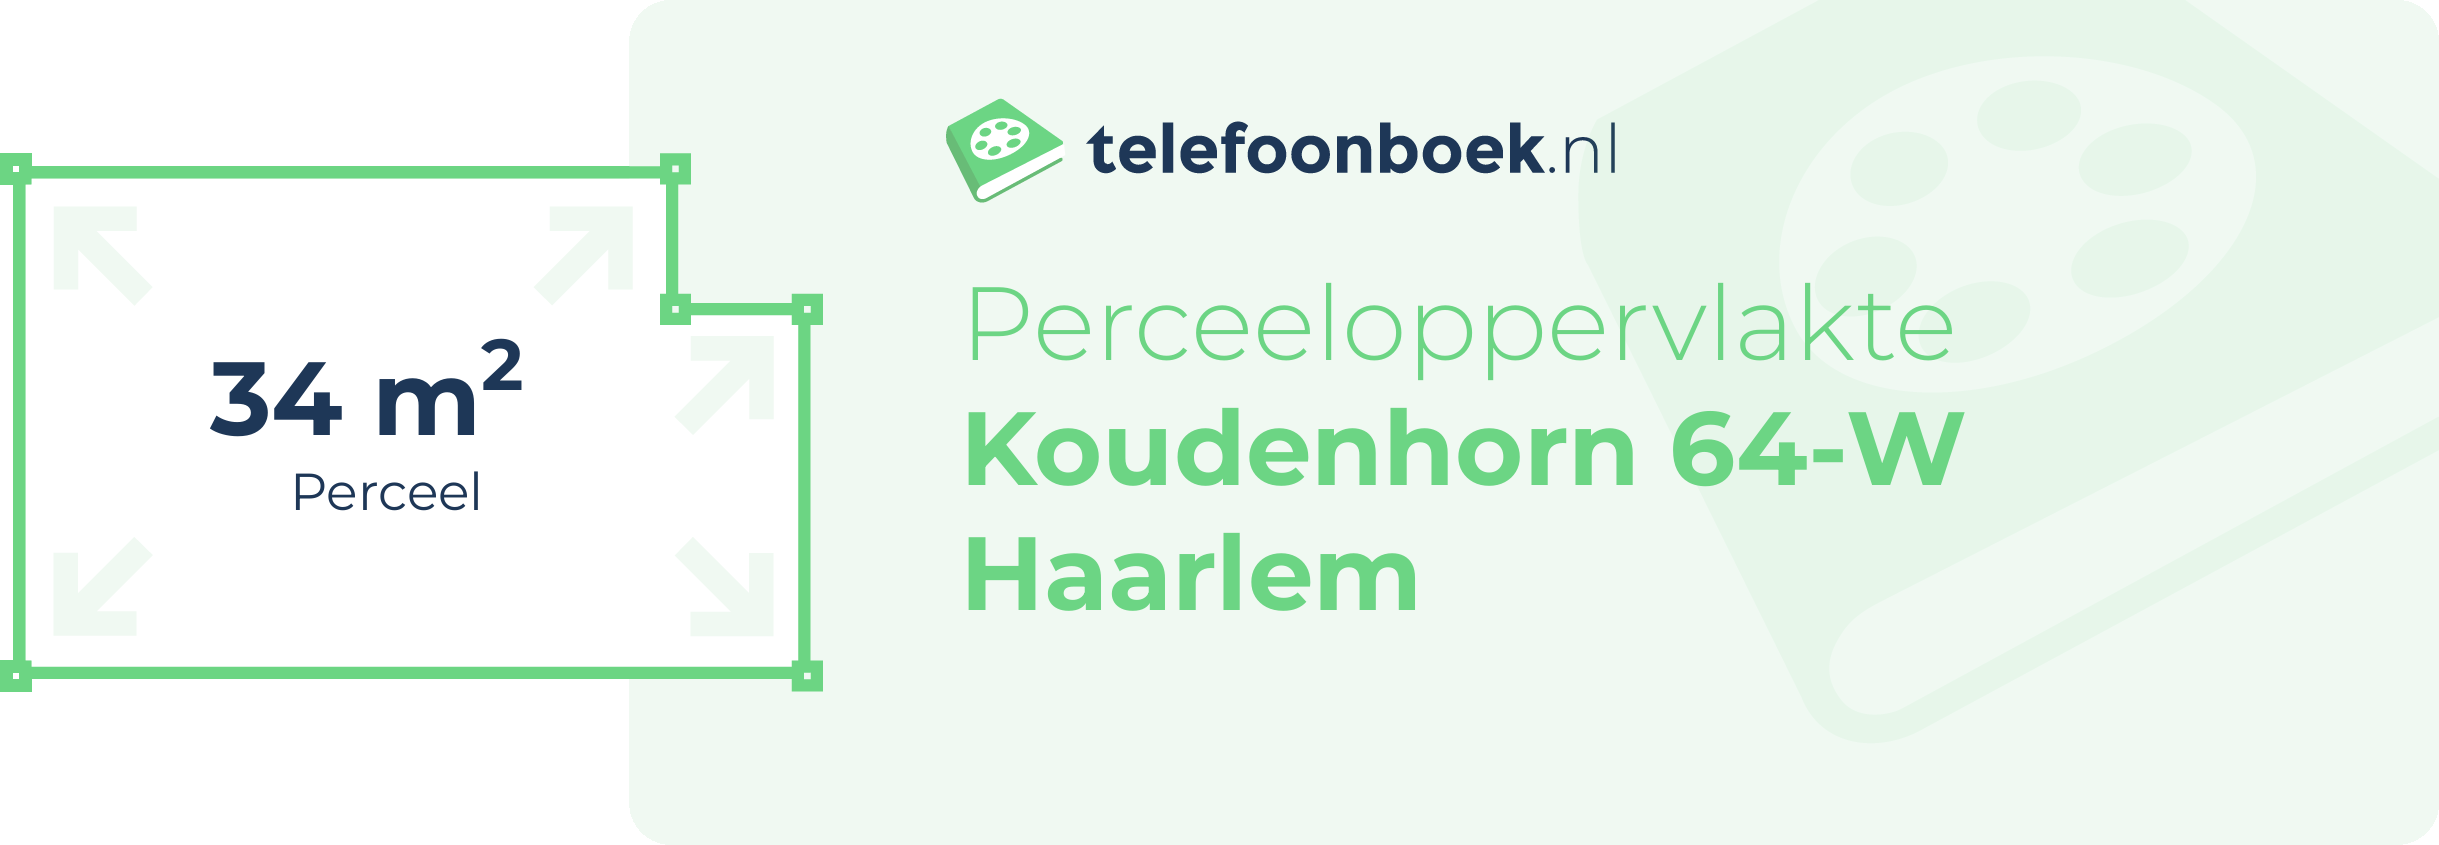 Perceeloppervlakte Koudenhorn 64-W Haarlem